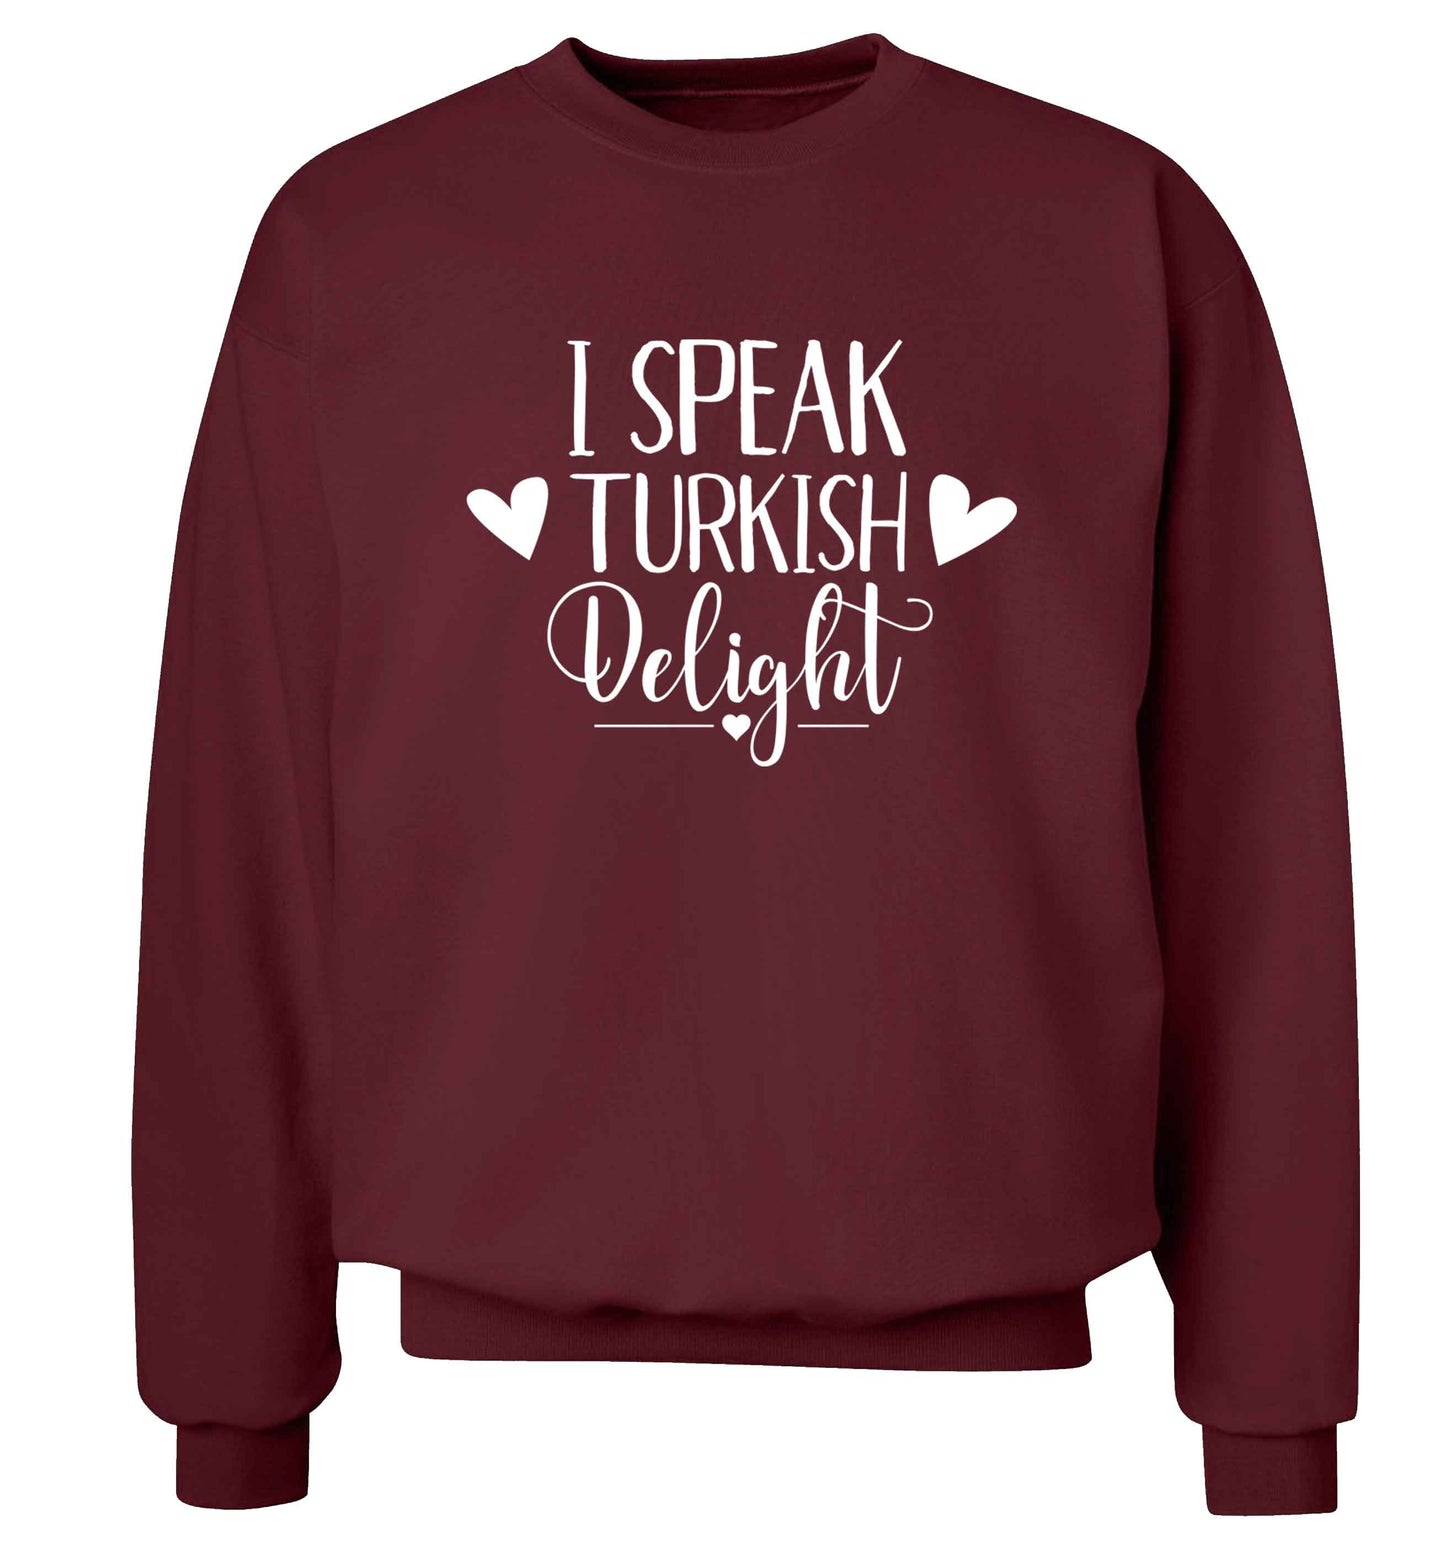 I speak turkish...delight Adult's unisex maroon Sweater 2XL